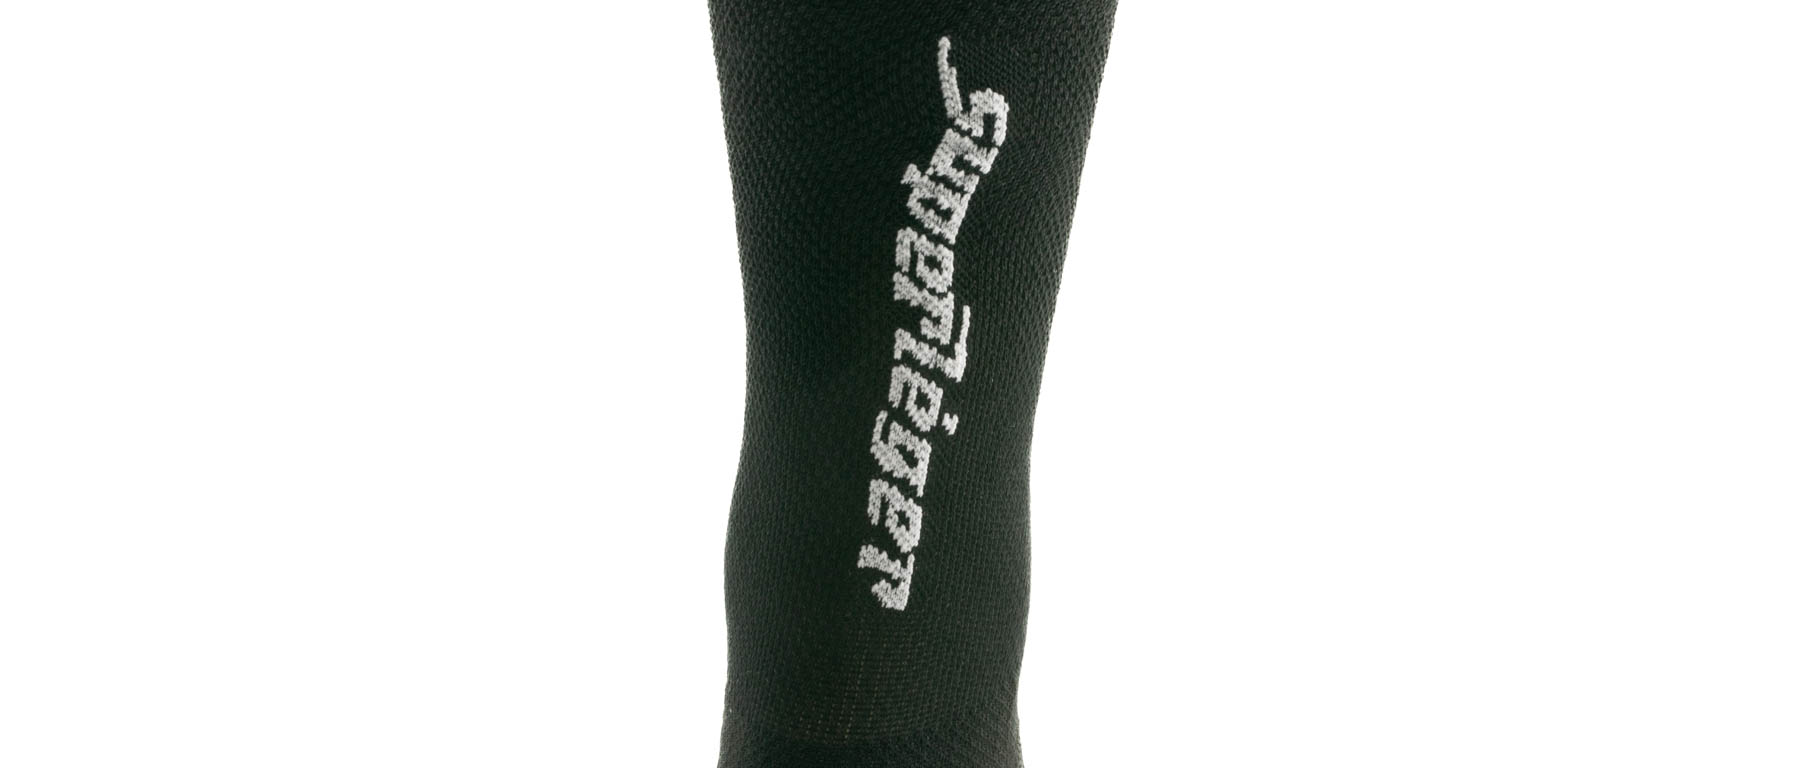 Assos RS Superleger S11 Socks